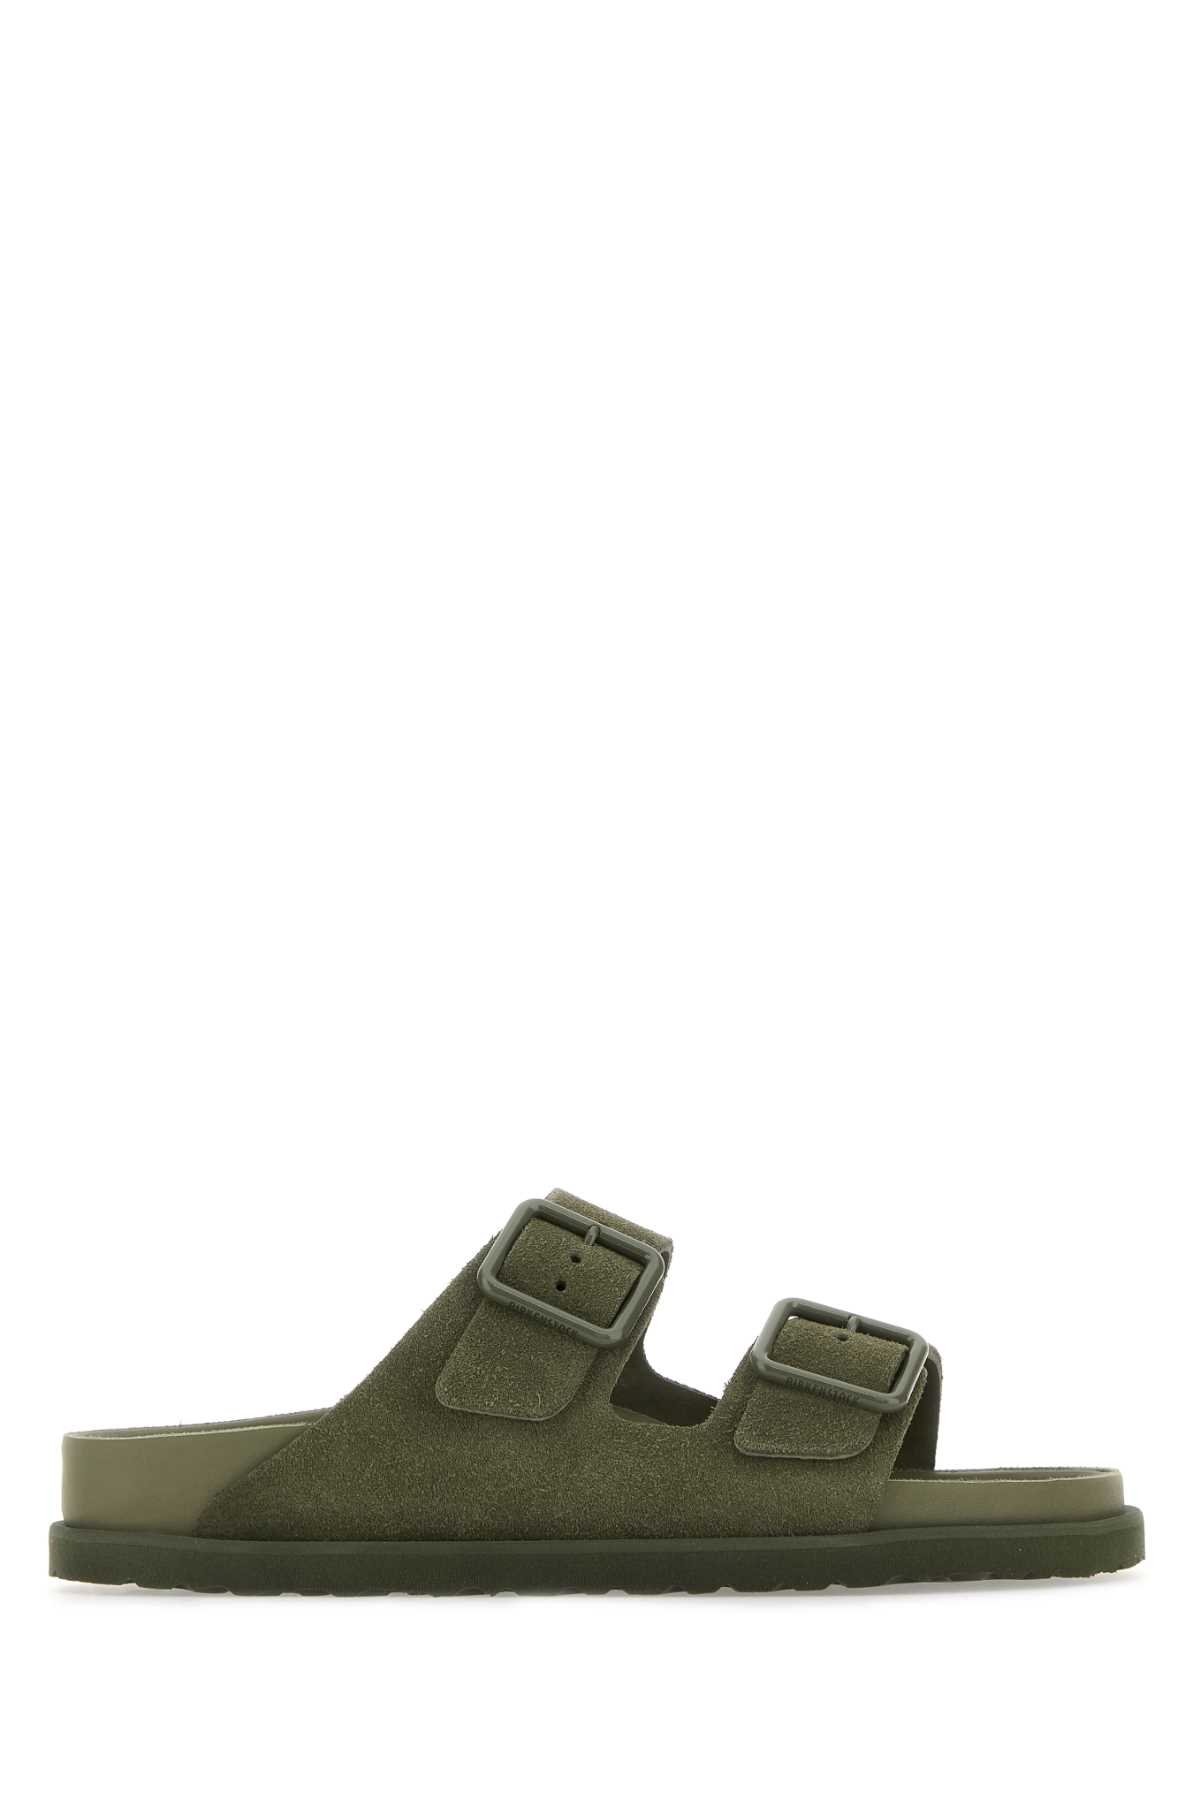 Army Green Suede Arizona Avantgarde Slippers